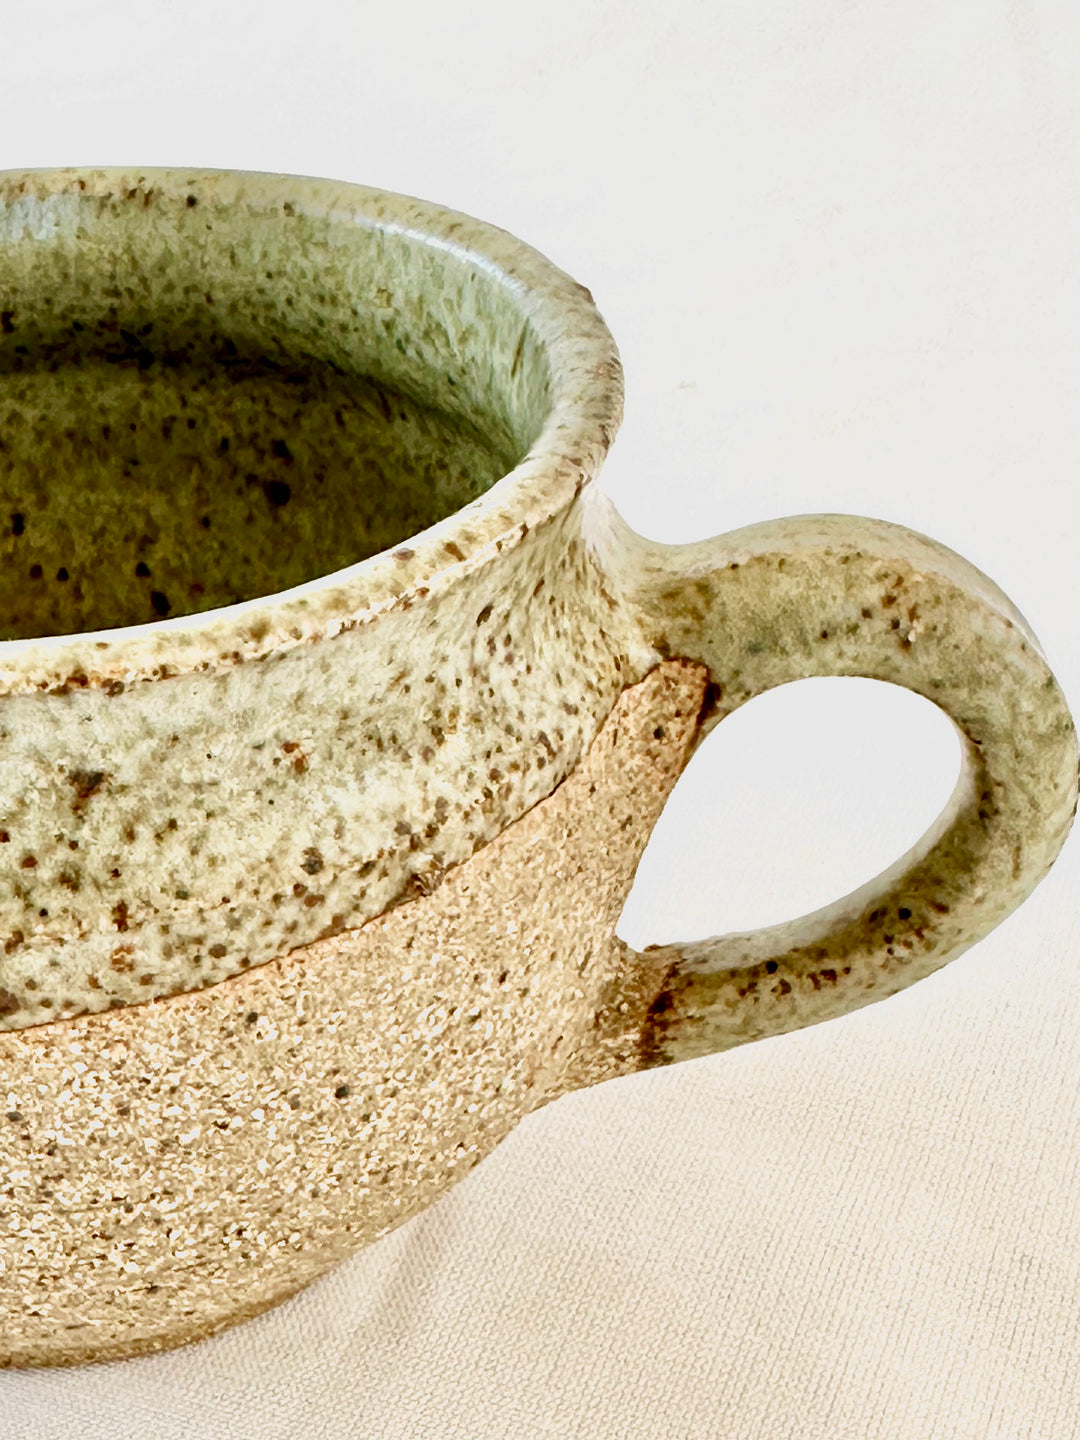 Handmade Vintage Ceramic Creamer and Sugar Bowl